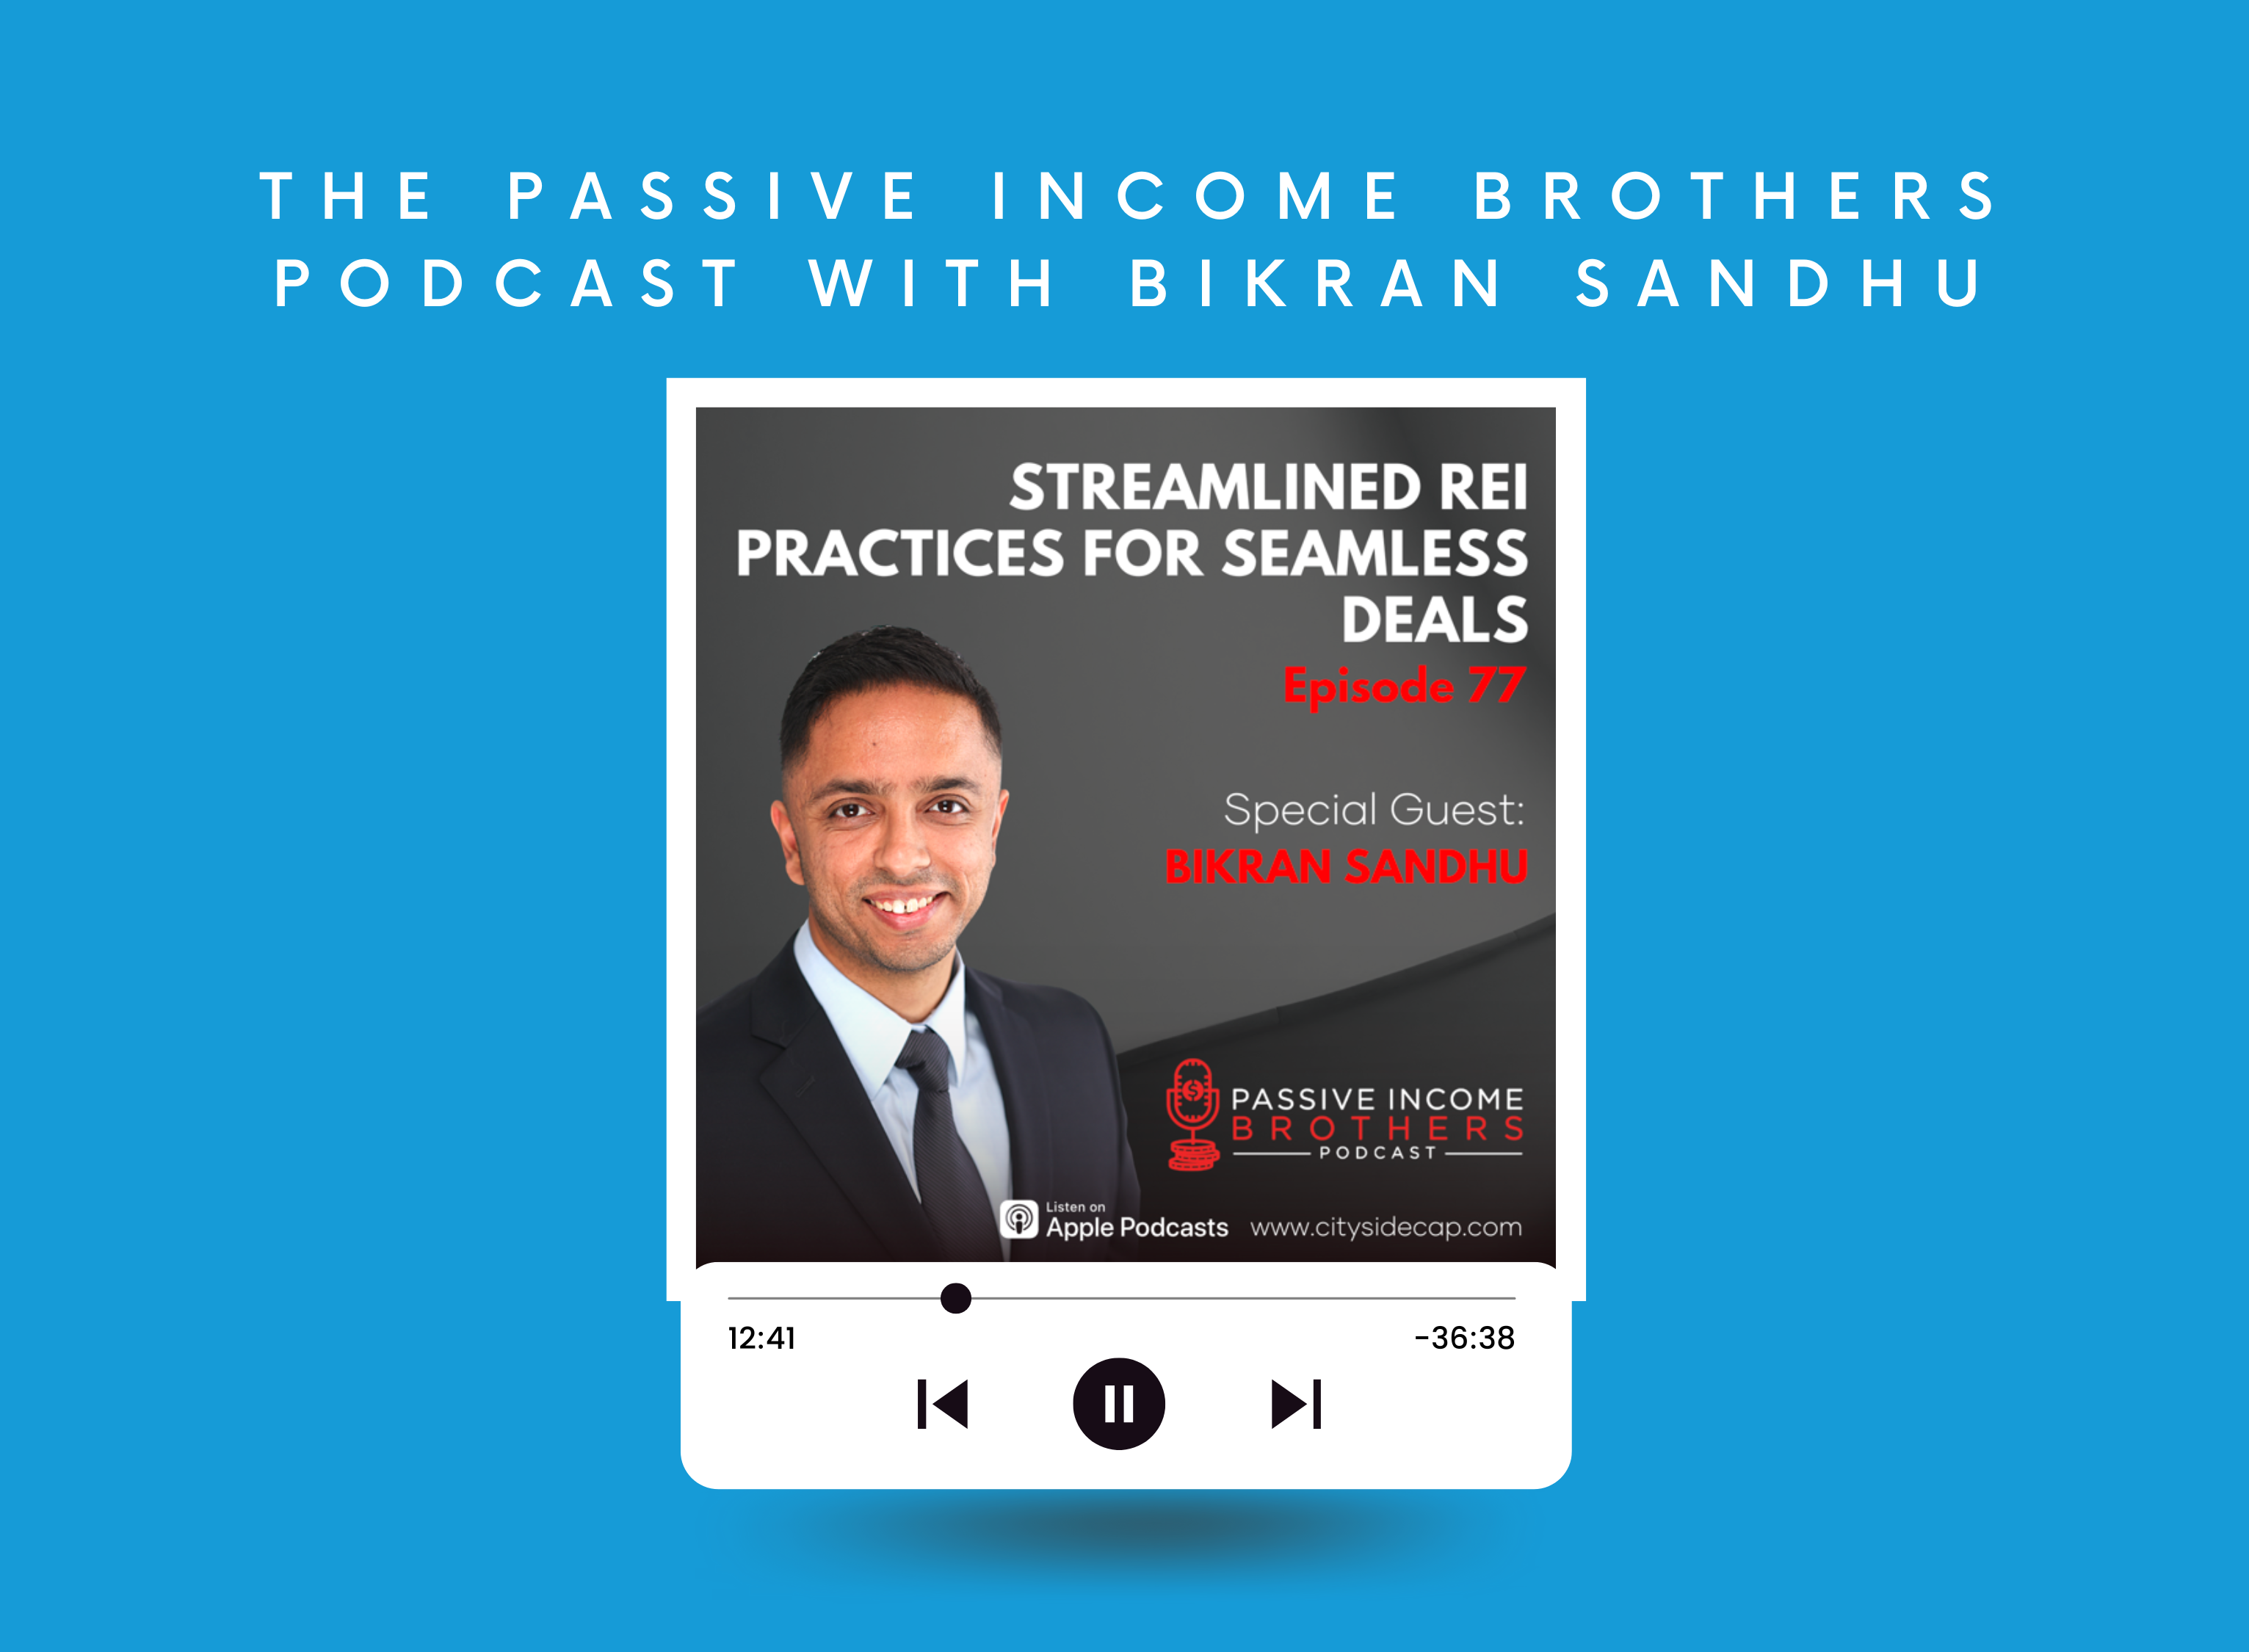 The Passive Income Brothers Podcast with Bikran Sandhu